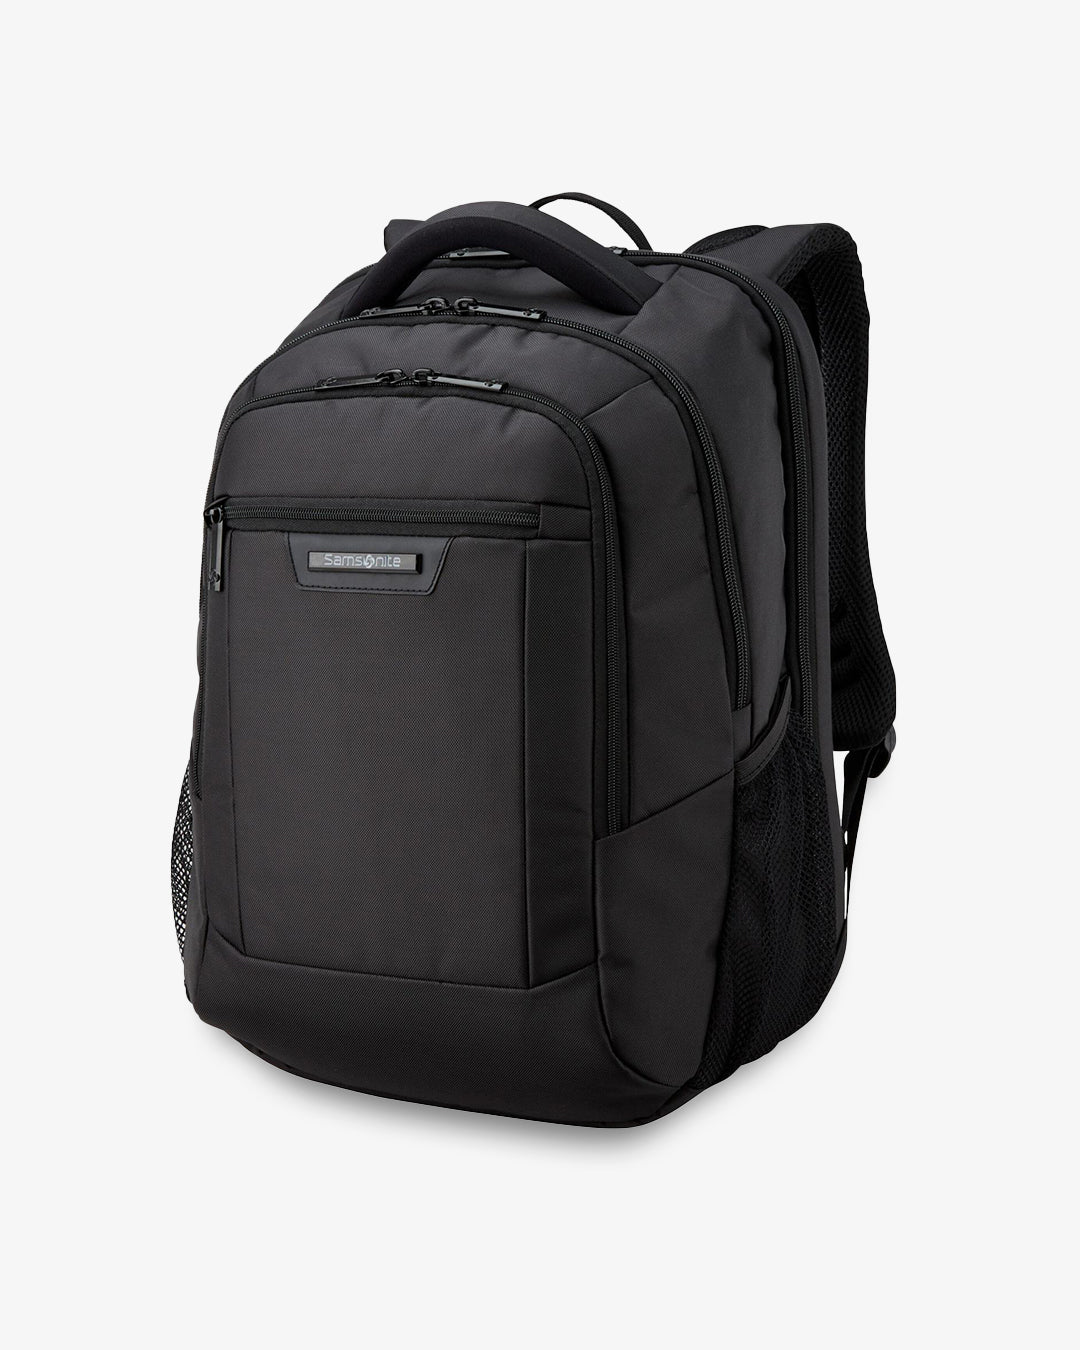 Samsonite Classic Business 2.0 Backpack